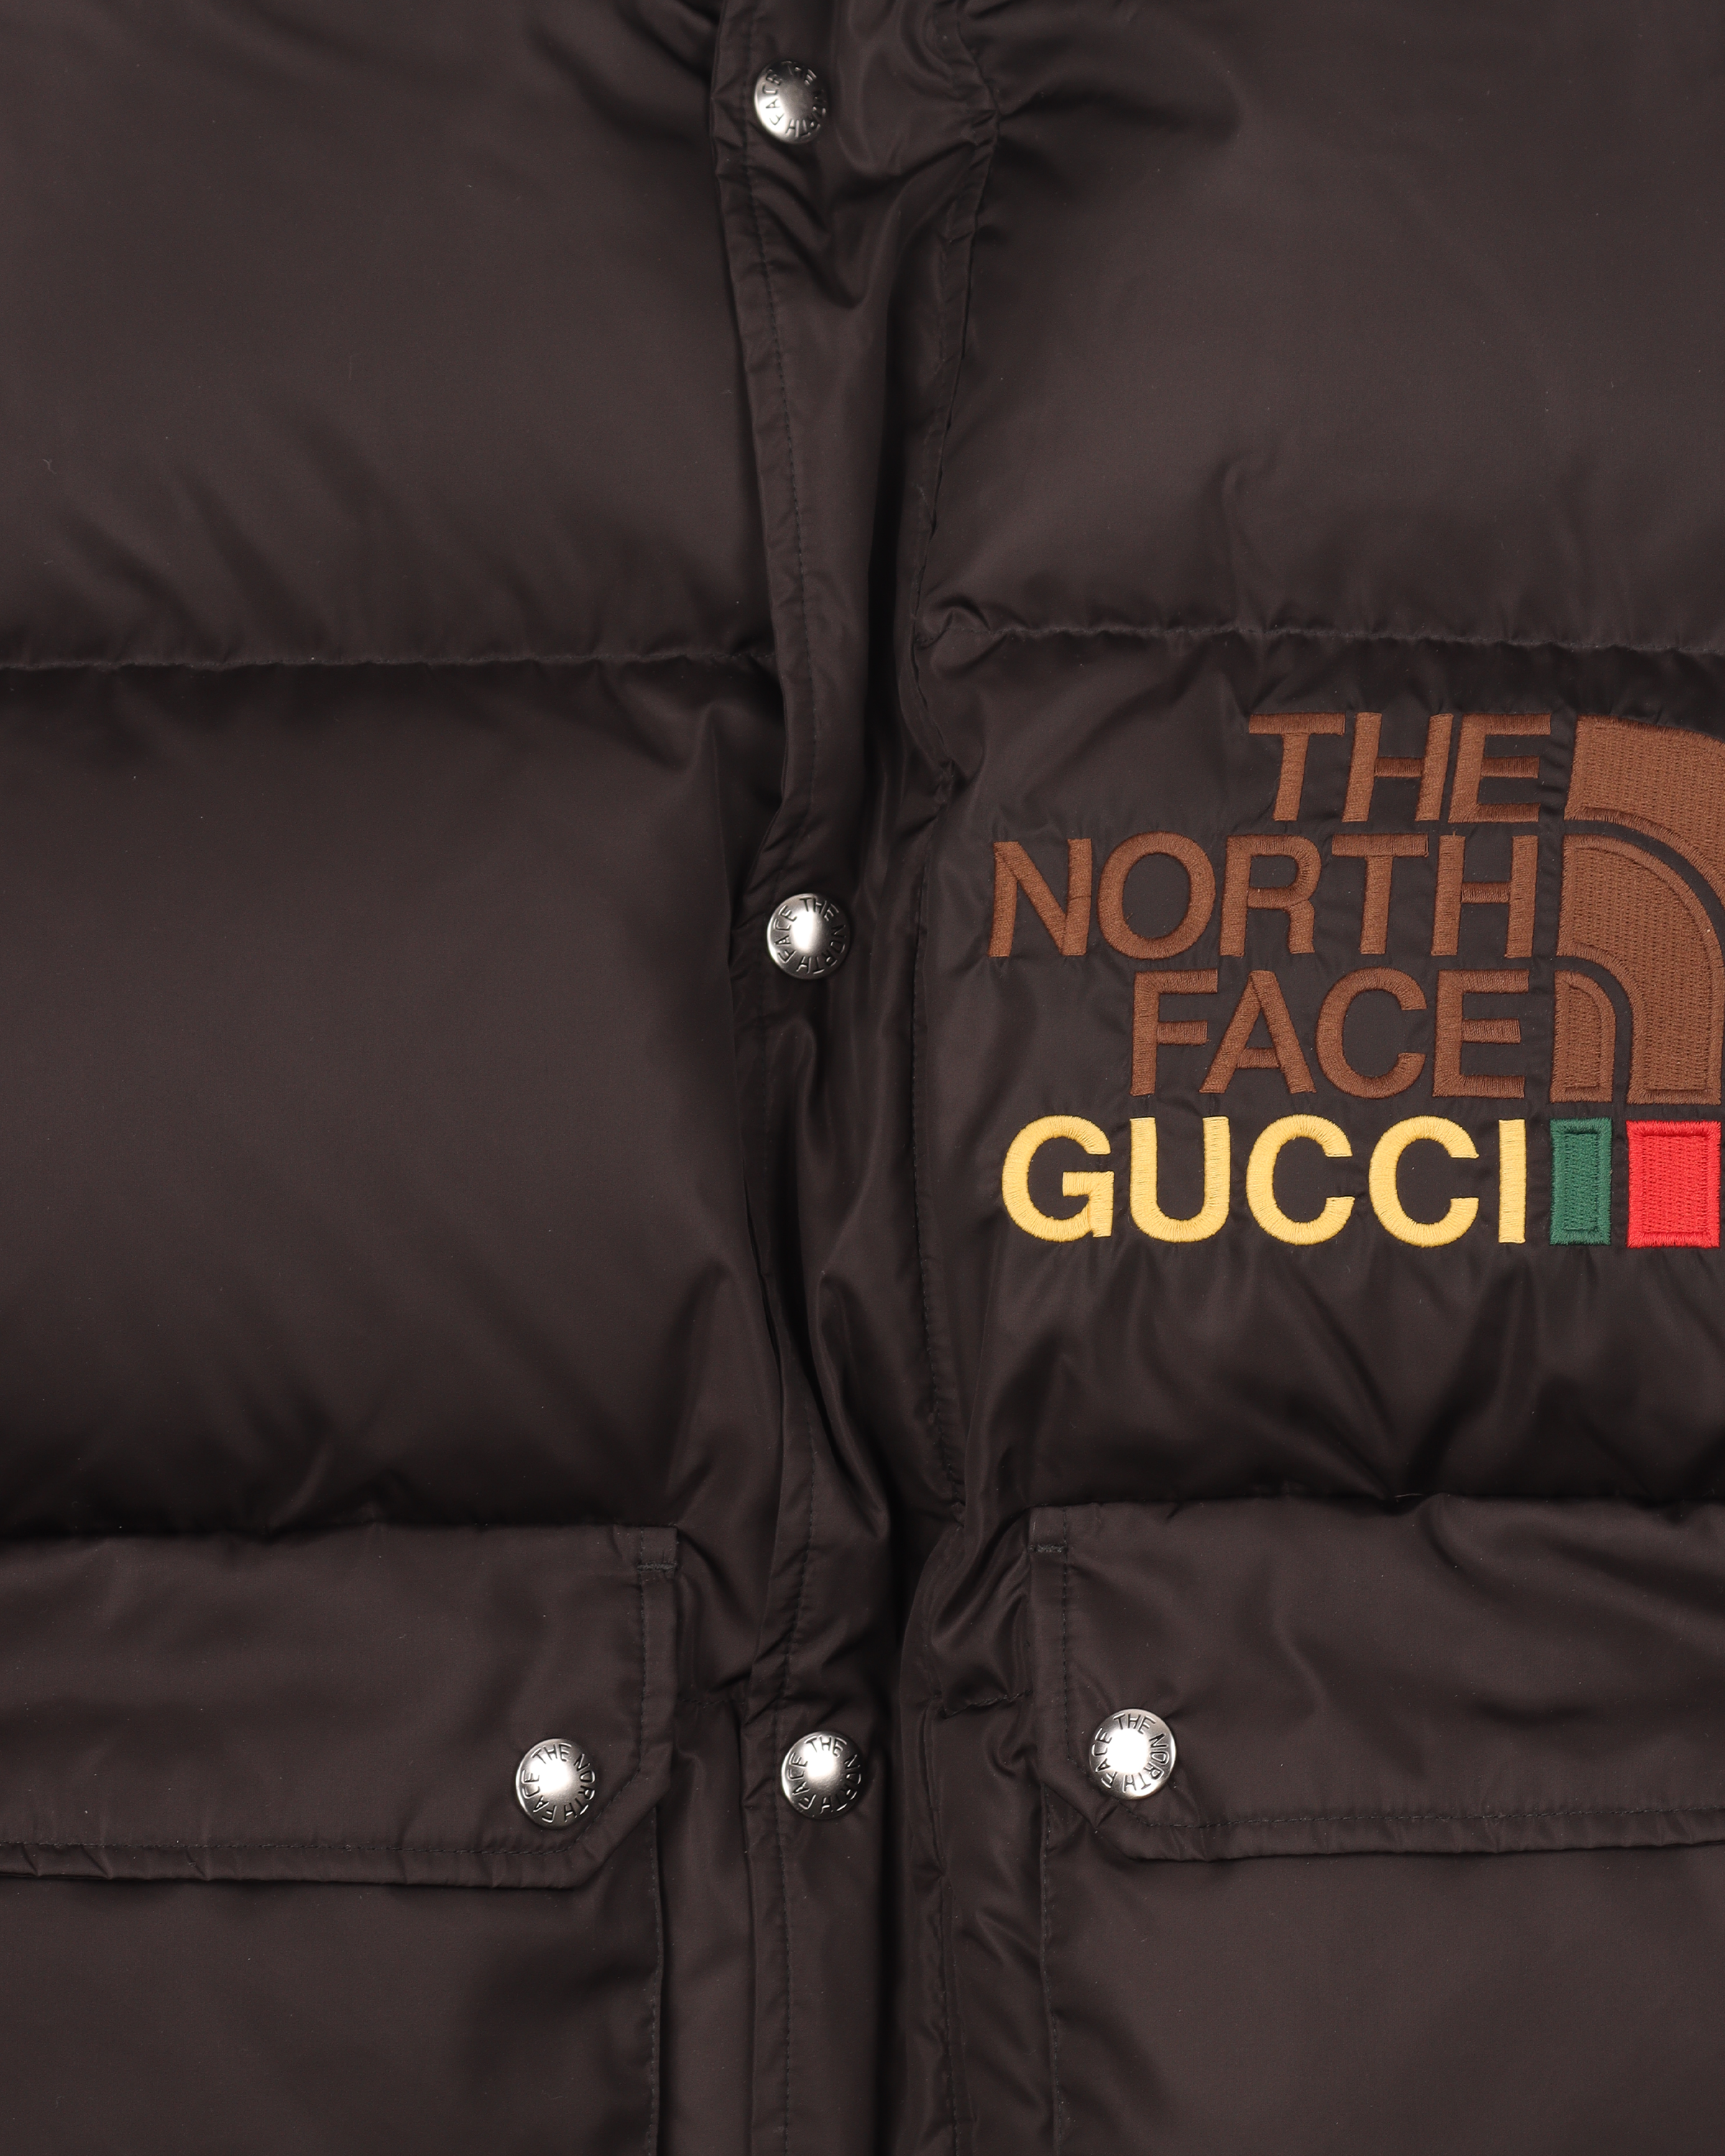 The North Face x Gucci nylon bomber jacket